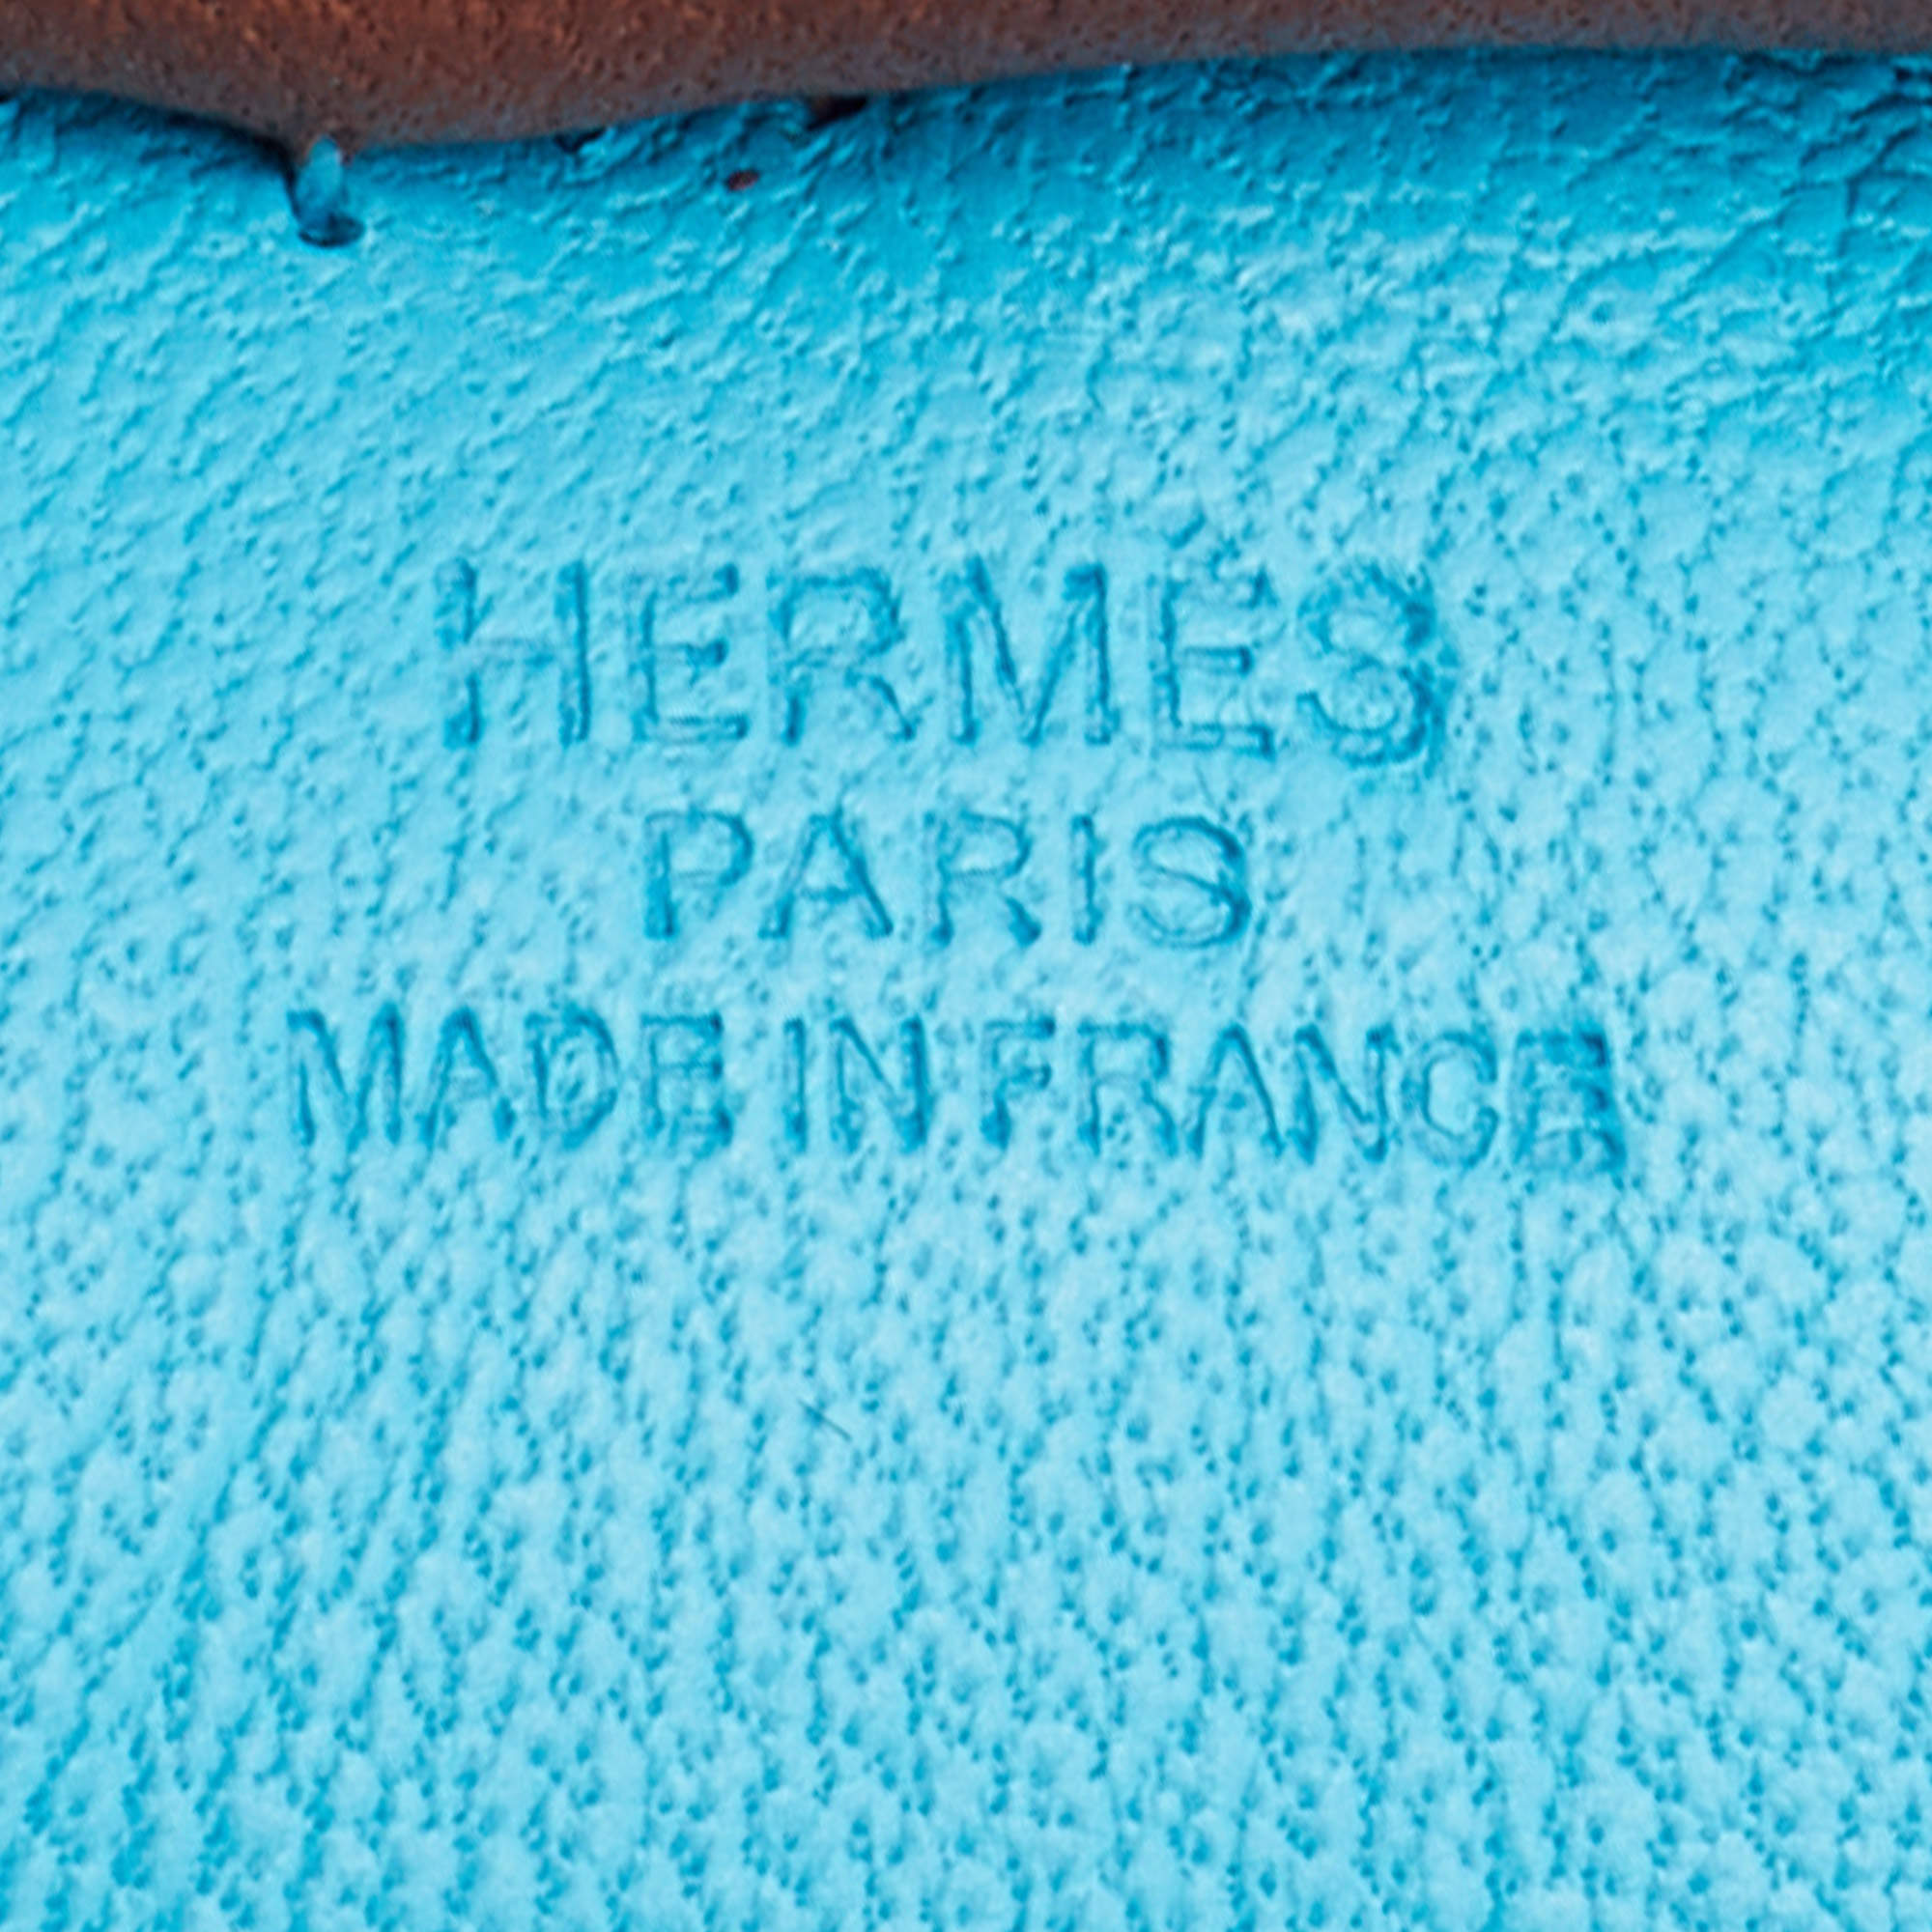 Hermes Blue Aztec Blue Electric Fauve Rodeo Horse Charm PM Small